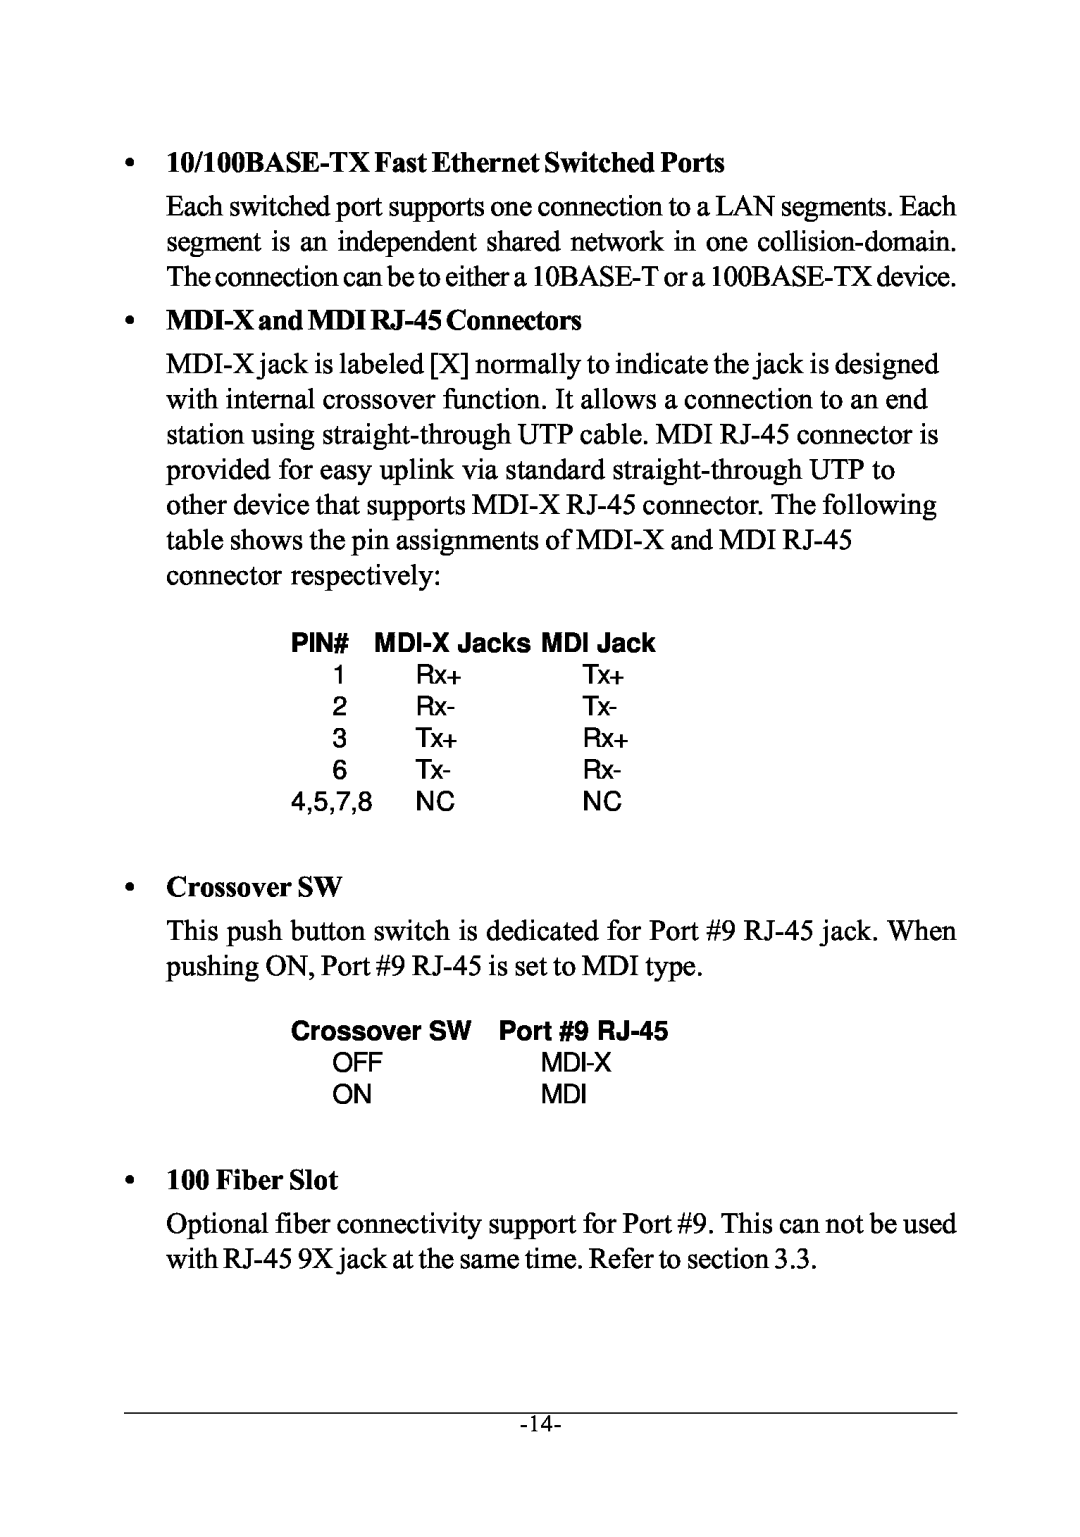 KTI Networks KS-801 manual Pin#, MDI-X Jacks MDI Jack, Crossover SW, Port #9 RJ-45 